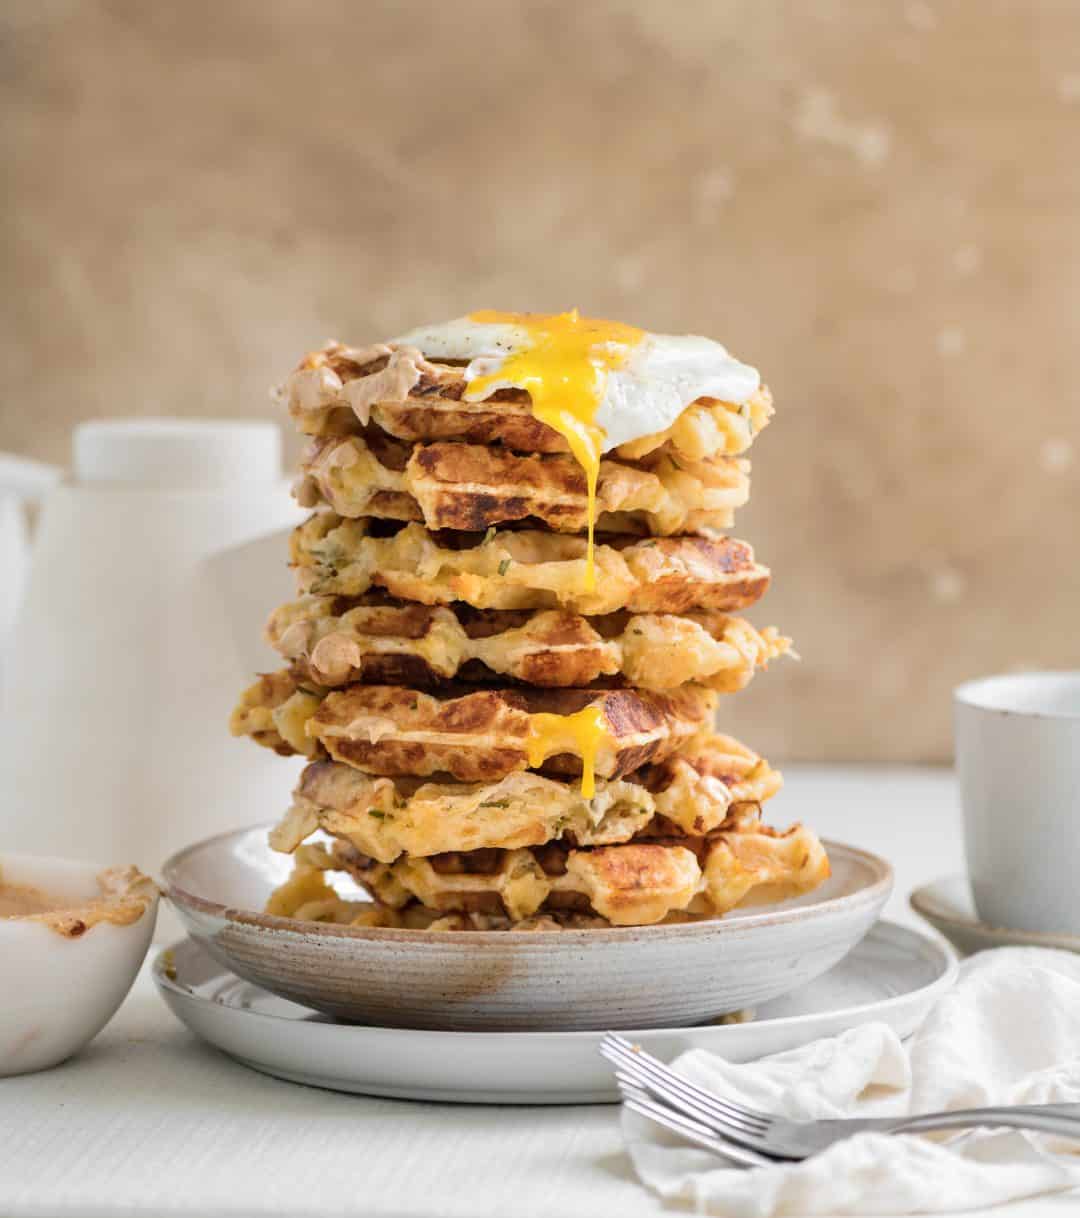 Rosemary Cheddar Buttermilk Waffles - Two Cups Flour